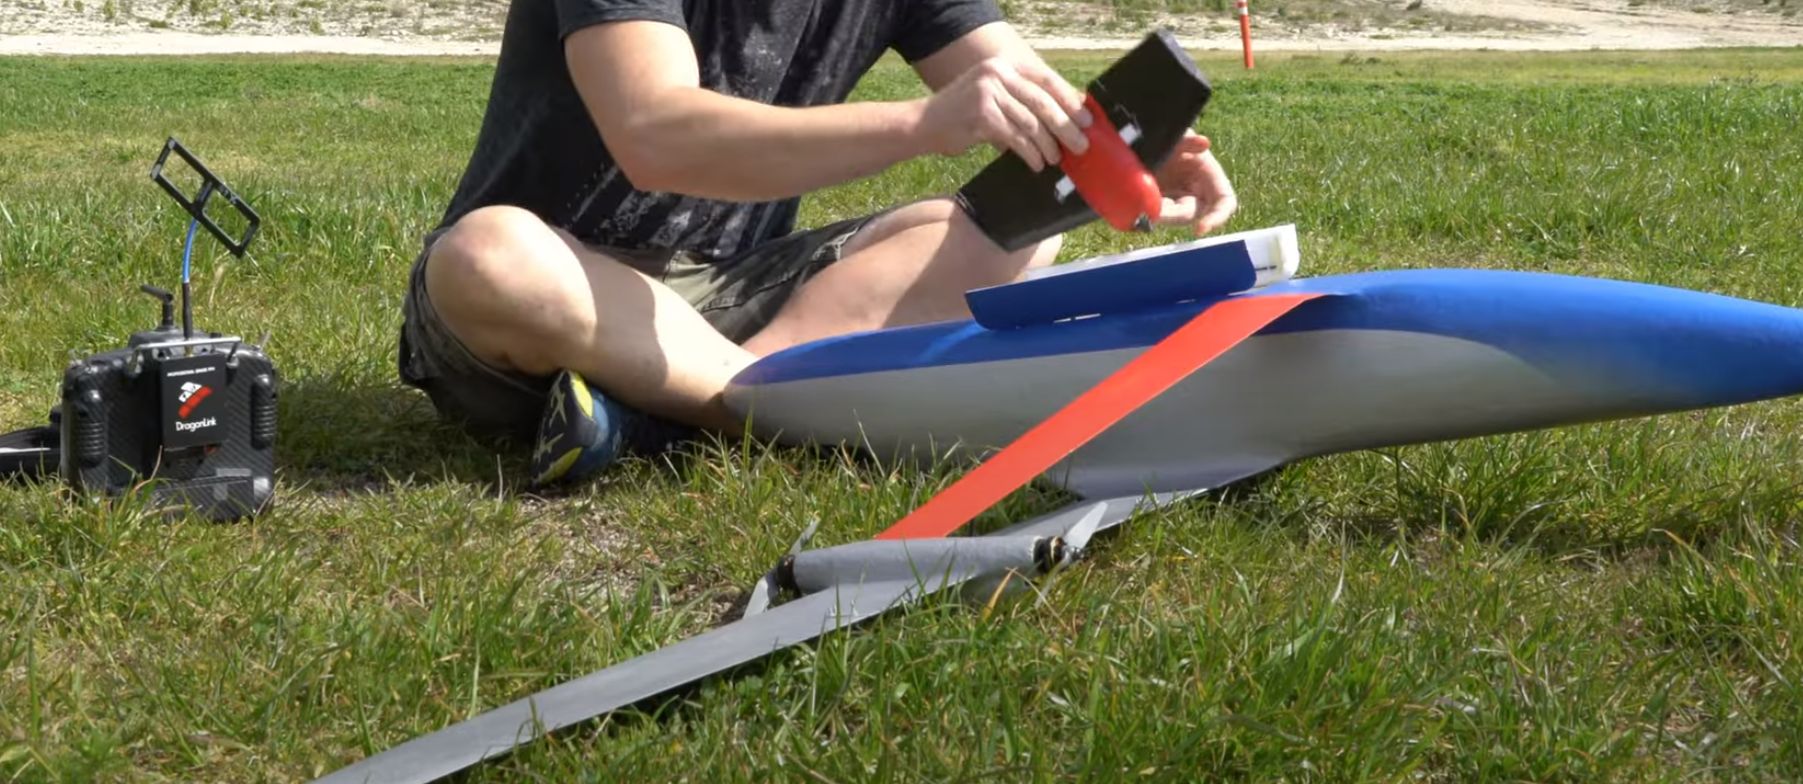 Building a Truss-Braced Model Airplane: Sense or Nonsense?